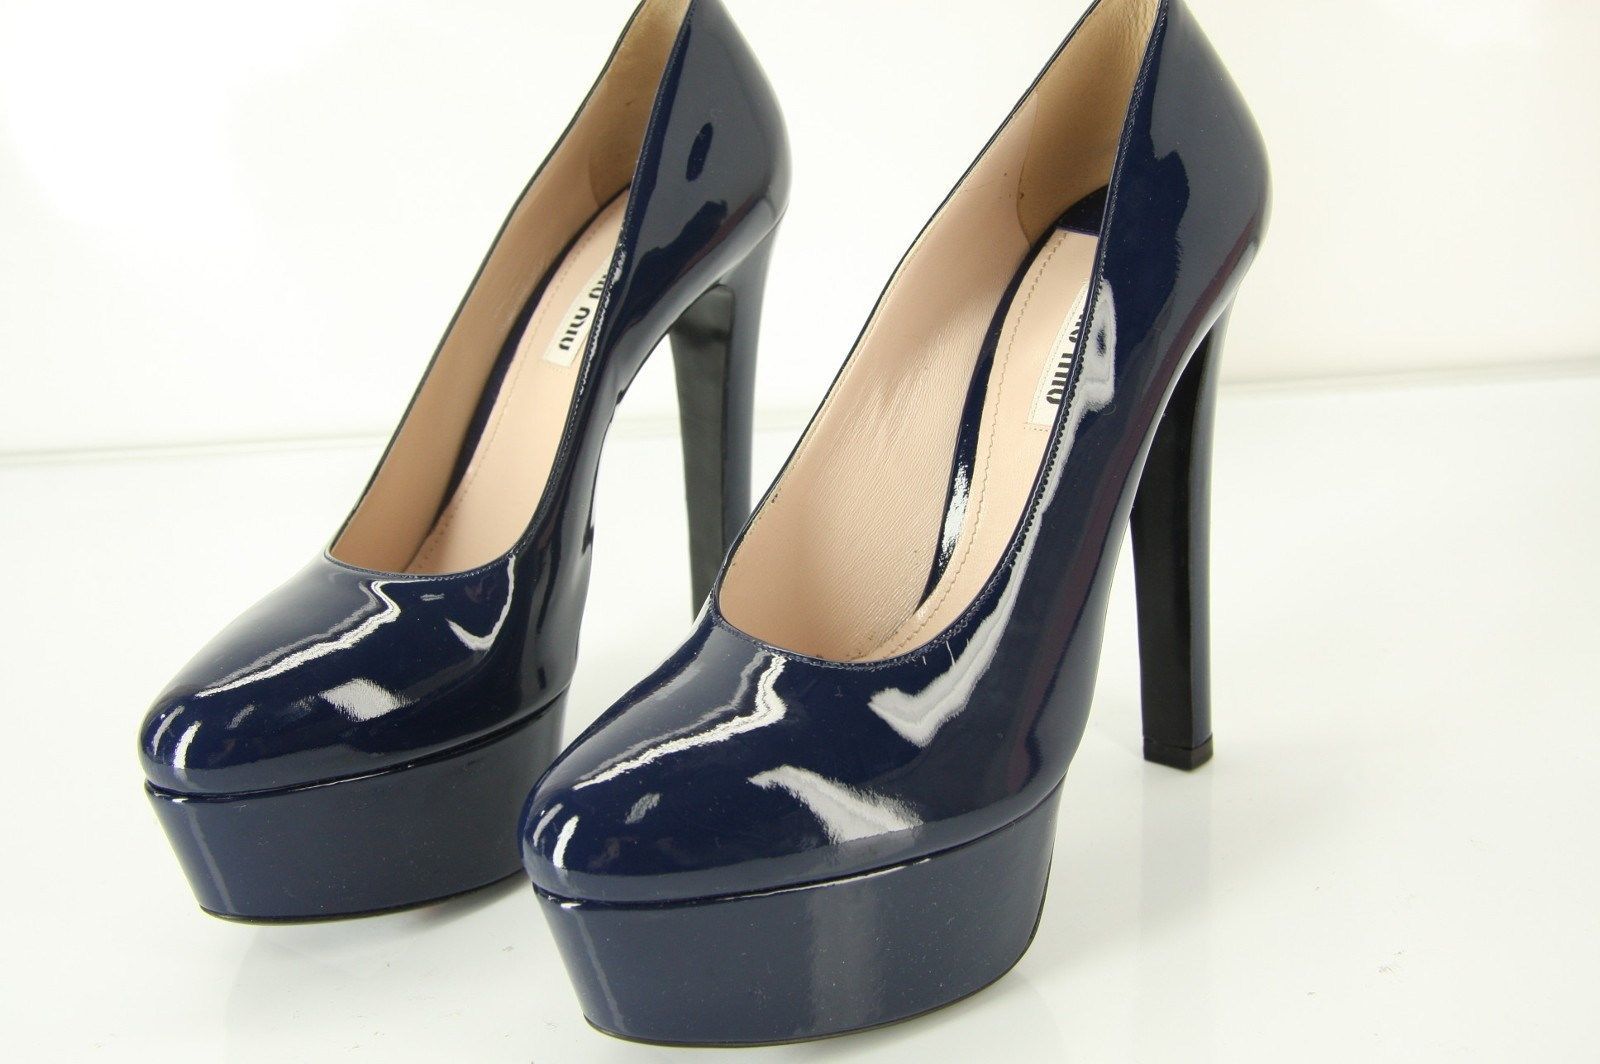 Miu Miu Blue Patent Platform Almond Toe High Heels Pumps Size 39.5 $685 New